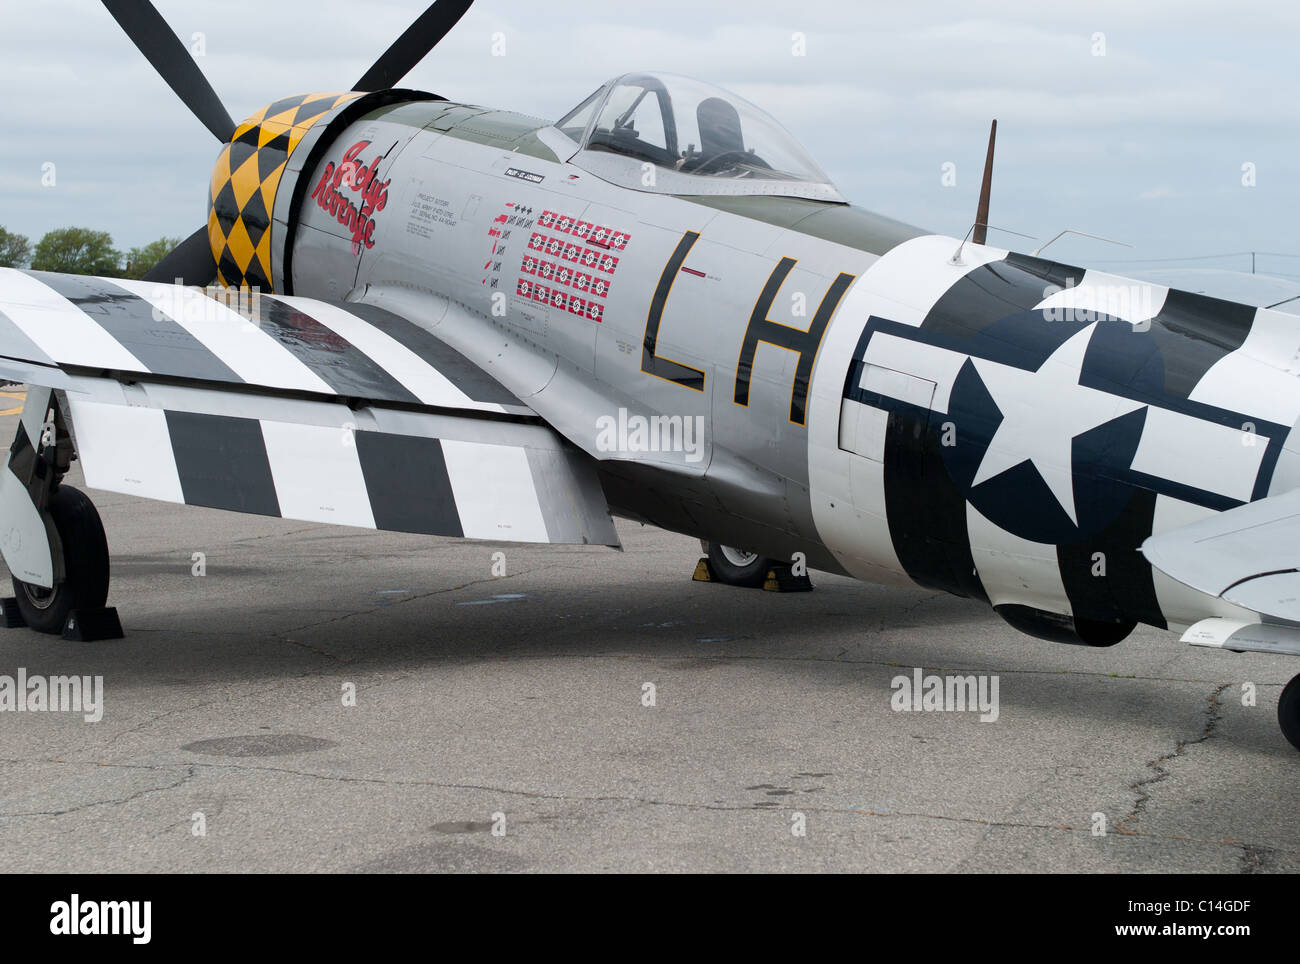 P-47 THUNDERBOLT FIGHTER-BOMBER WW2 VINTAGE FIGHTER PLANE REPUBLIC FIELD LONG ISLAND NEW YORK USA Stock Photo